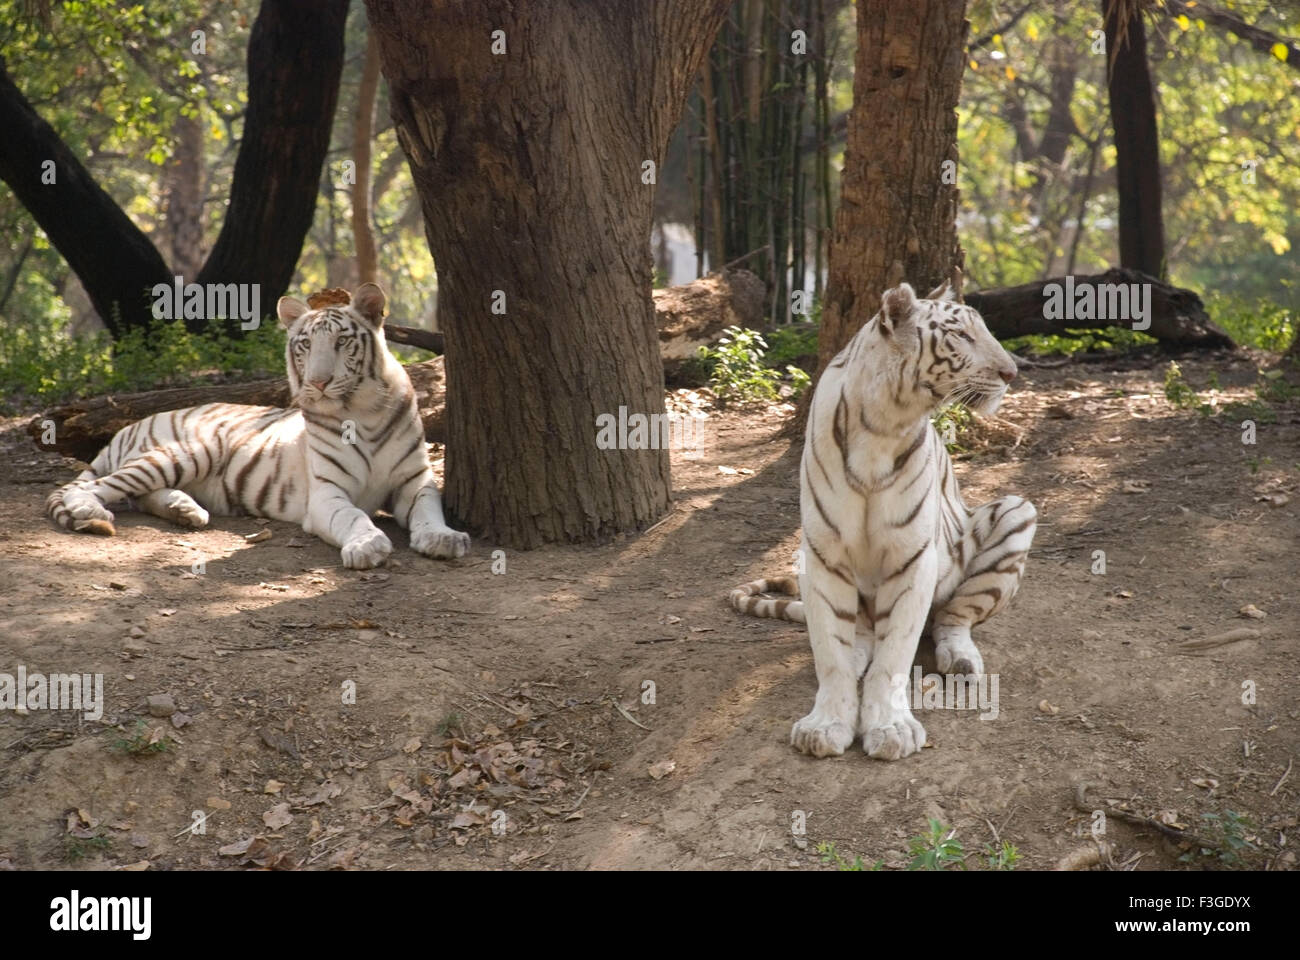 Tigre blanc, tigre blanchi, animal, pigmentation leuciste, tigres du Bengale, Inde, Asie Banque D'Images